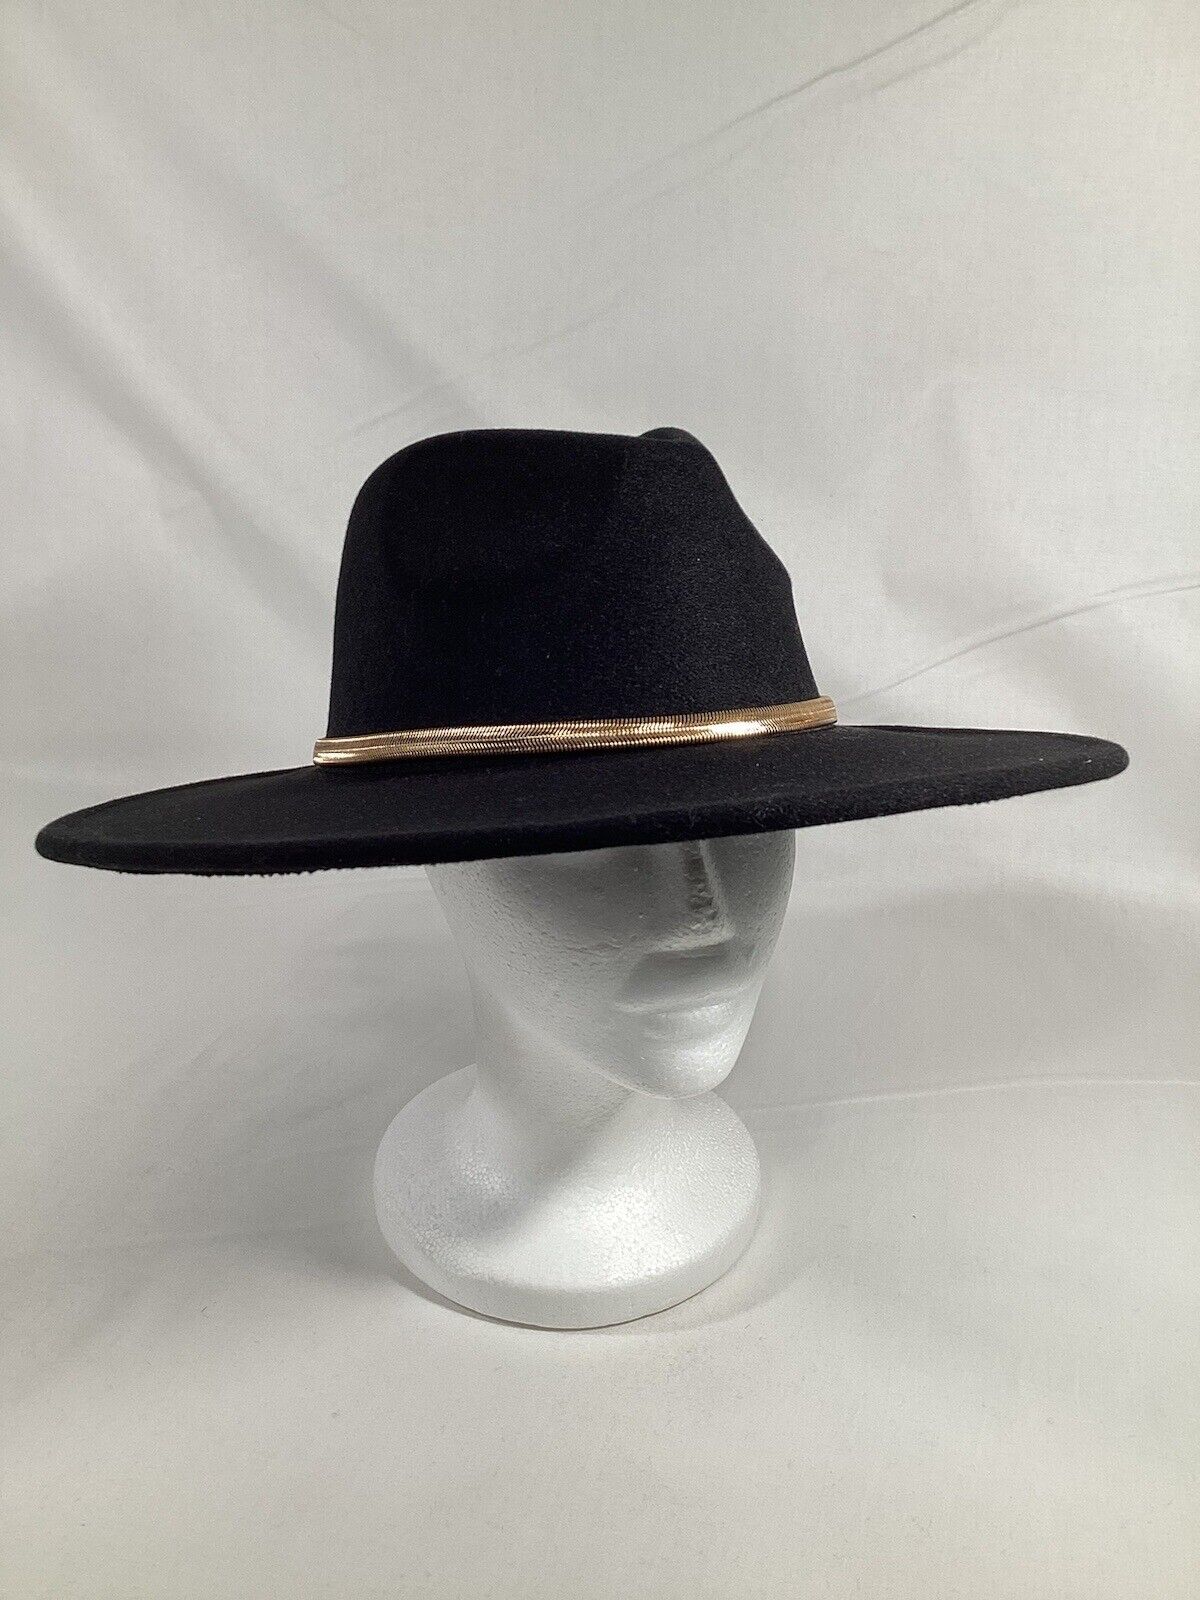 Forever 21 Black Felt Style Cowboy Hat w/ Gold Tone Band One Size (22-3/4”)